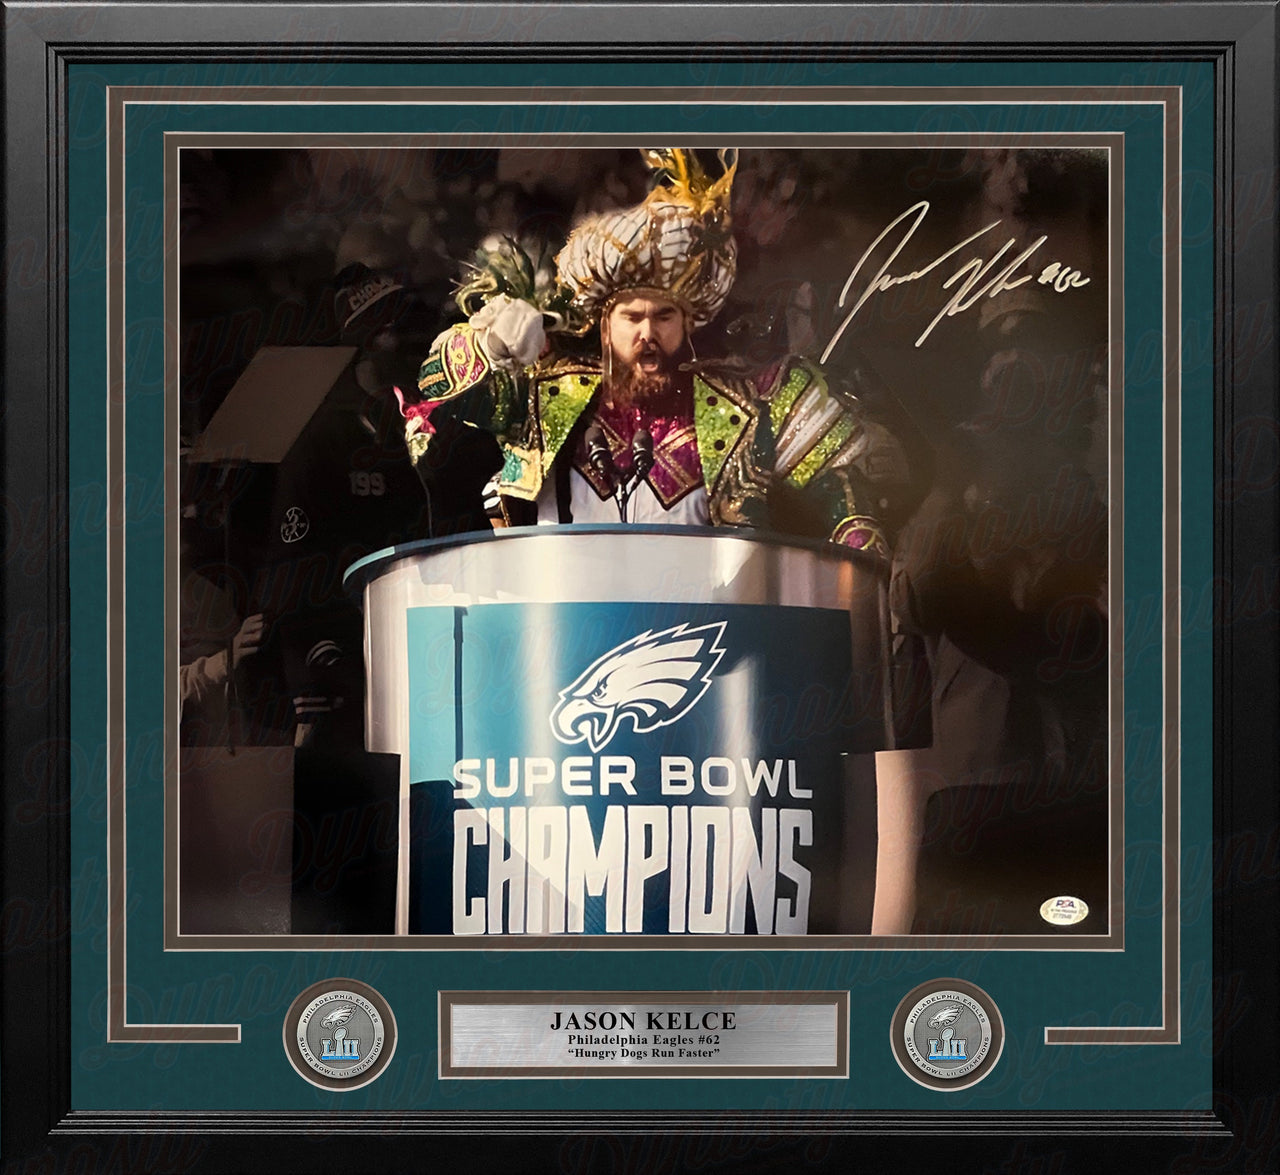 Jason Kelce Super Bowl Champions Philadelphia Eagles Autographed Spotlight Framed Football Photo - Dynasty Sports & Framing 